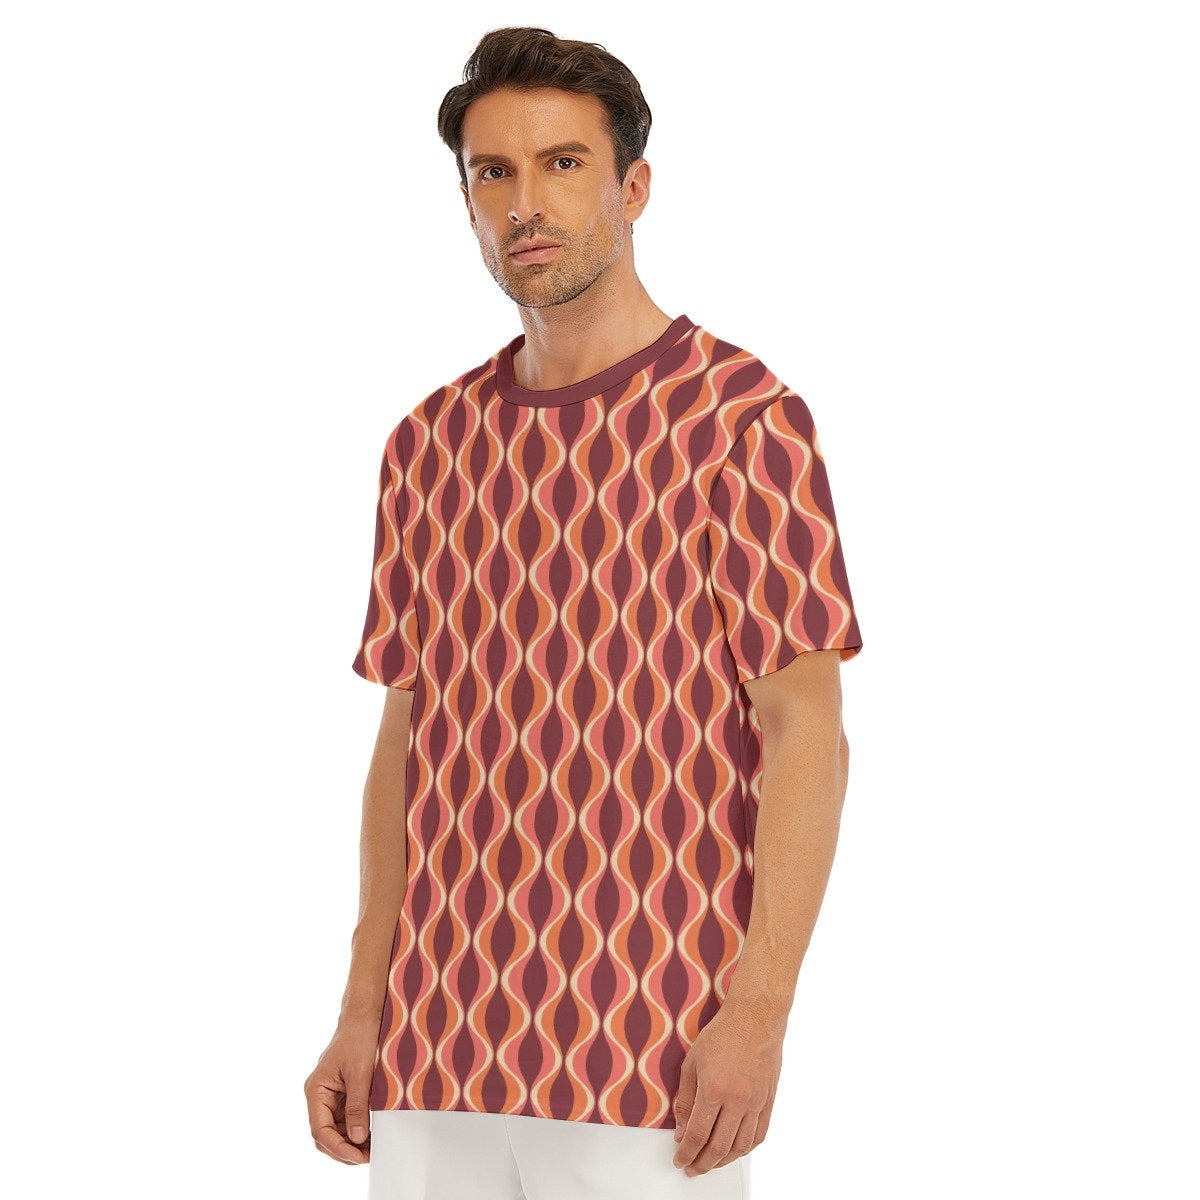 Retro T-Shirt Men, 100% Cotton T-shirt, 60s 70s Style Shirt, Vintage Style T-Shirt, Maroon Geometric T-shirt